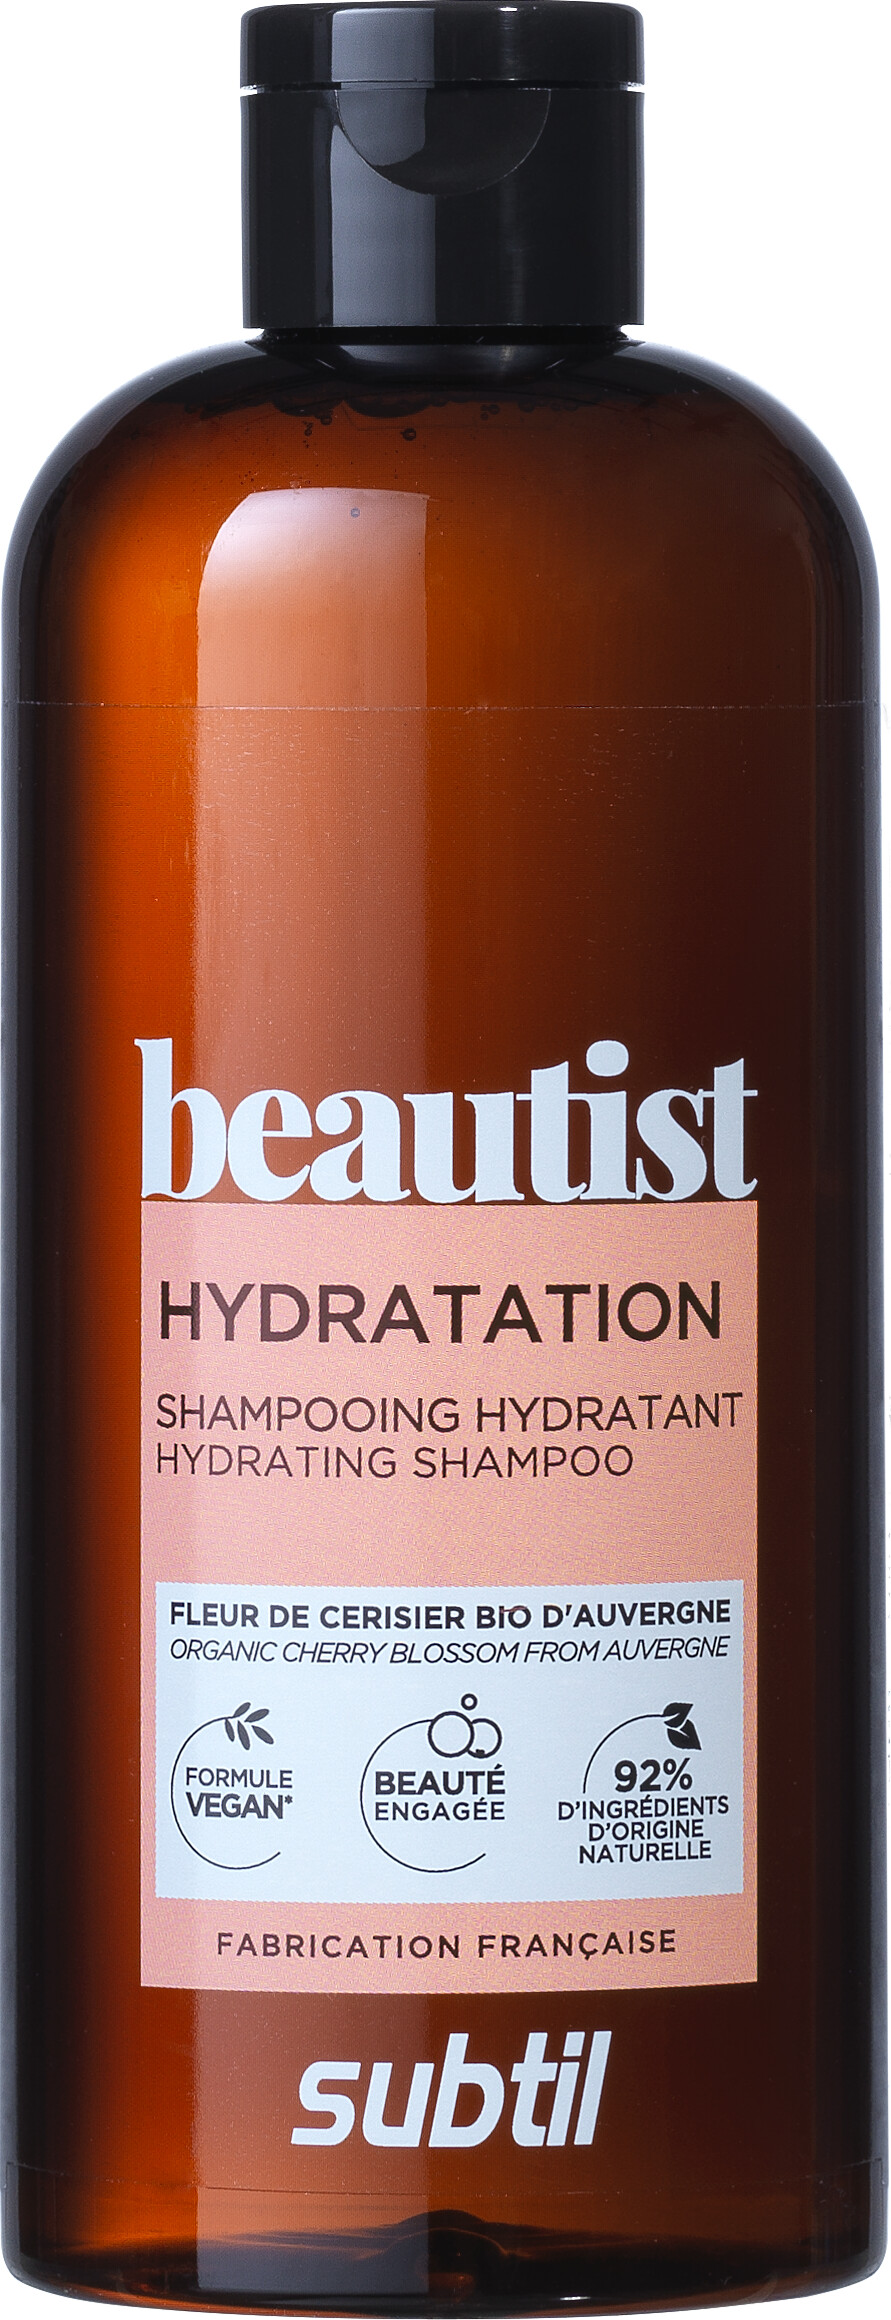 Se Subtil Beautist - Hydrating Shampoo - Organic Cherry Blossom 300 Ml hos Gucca.dk